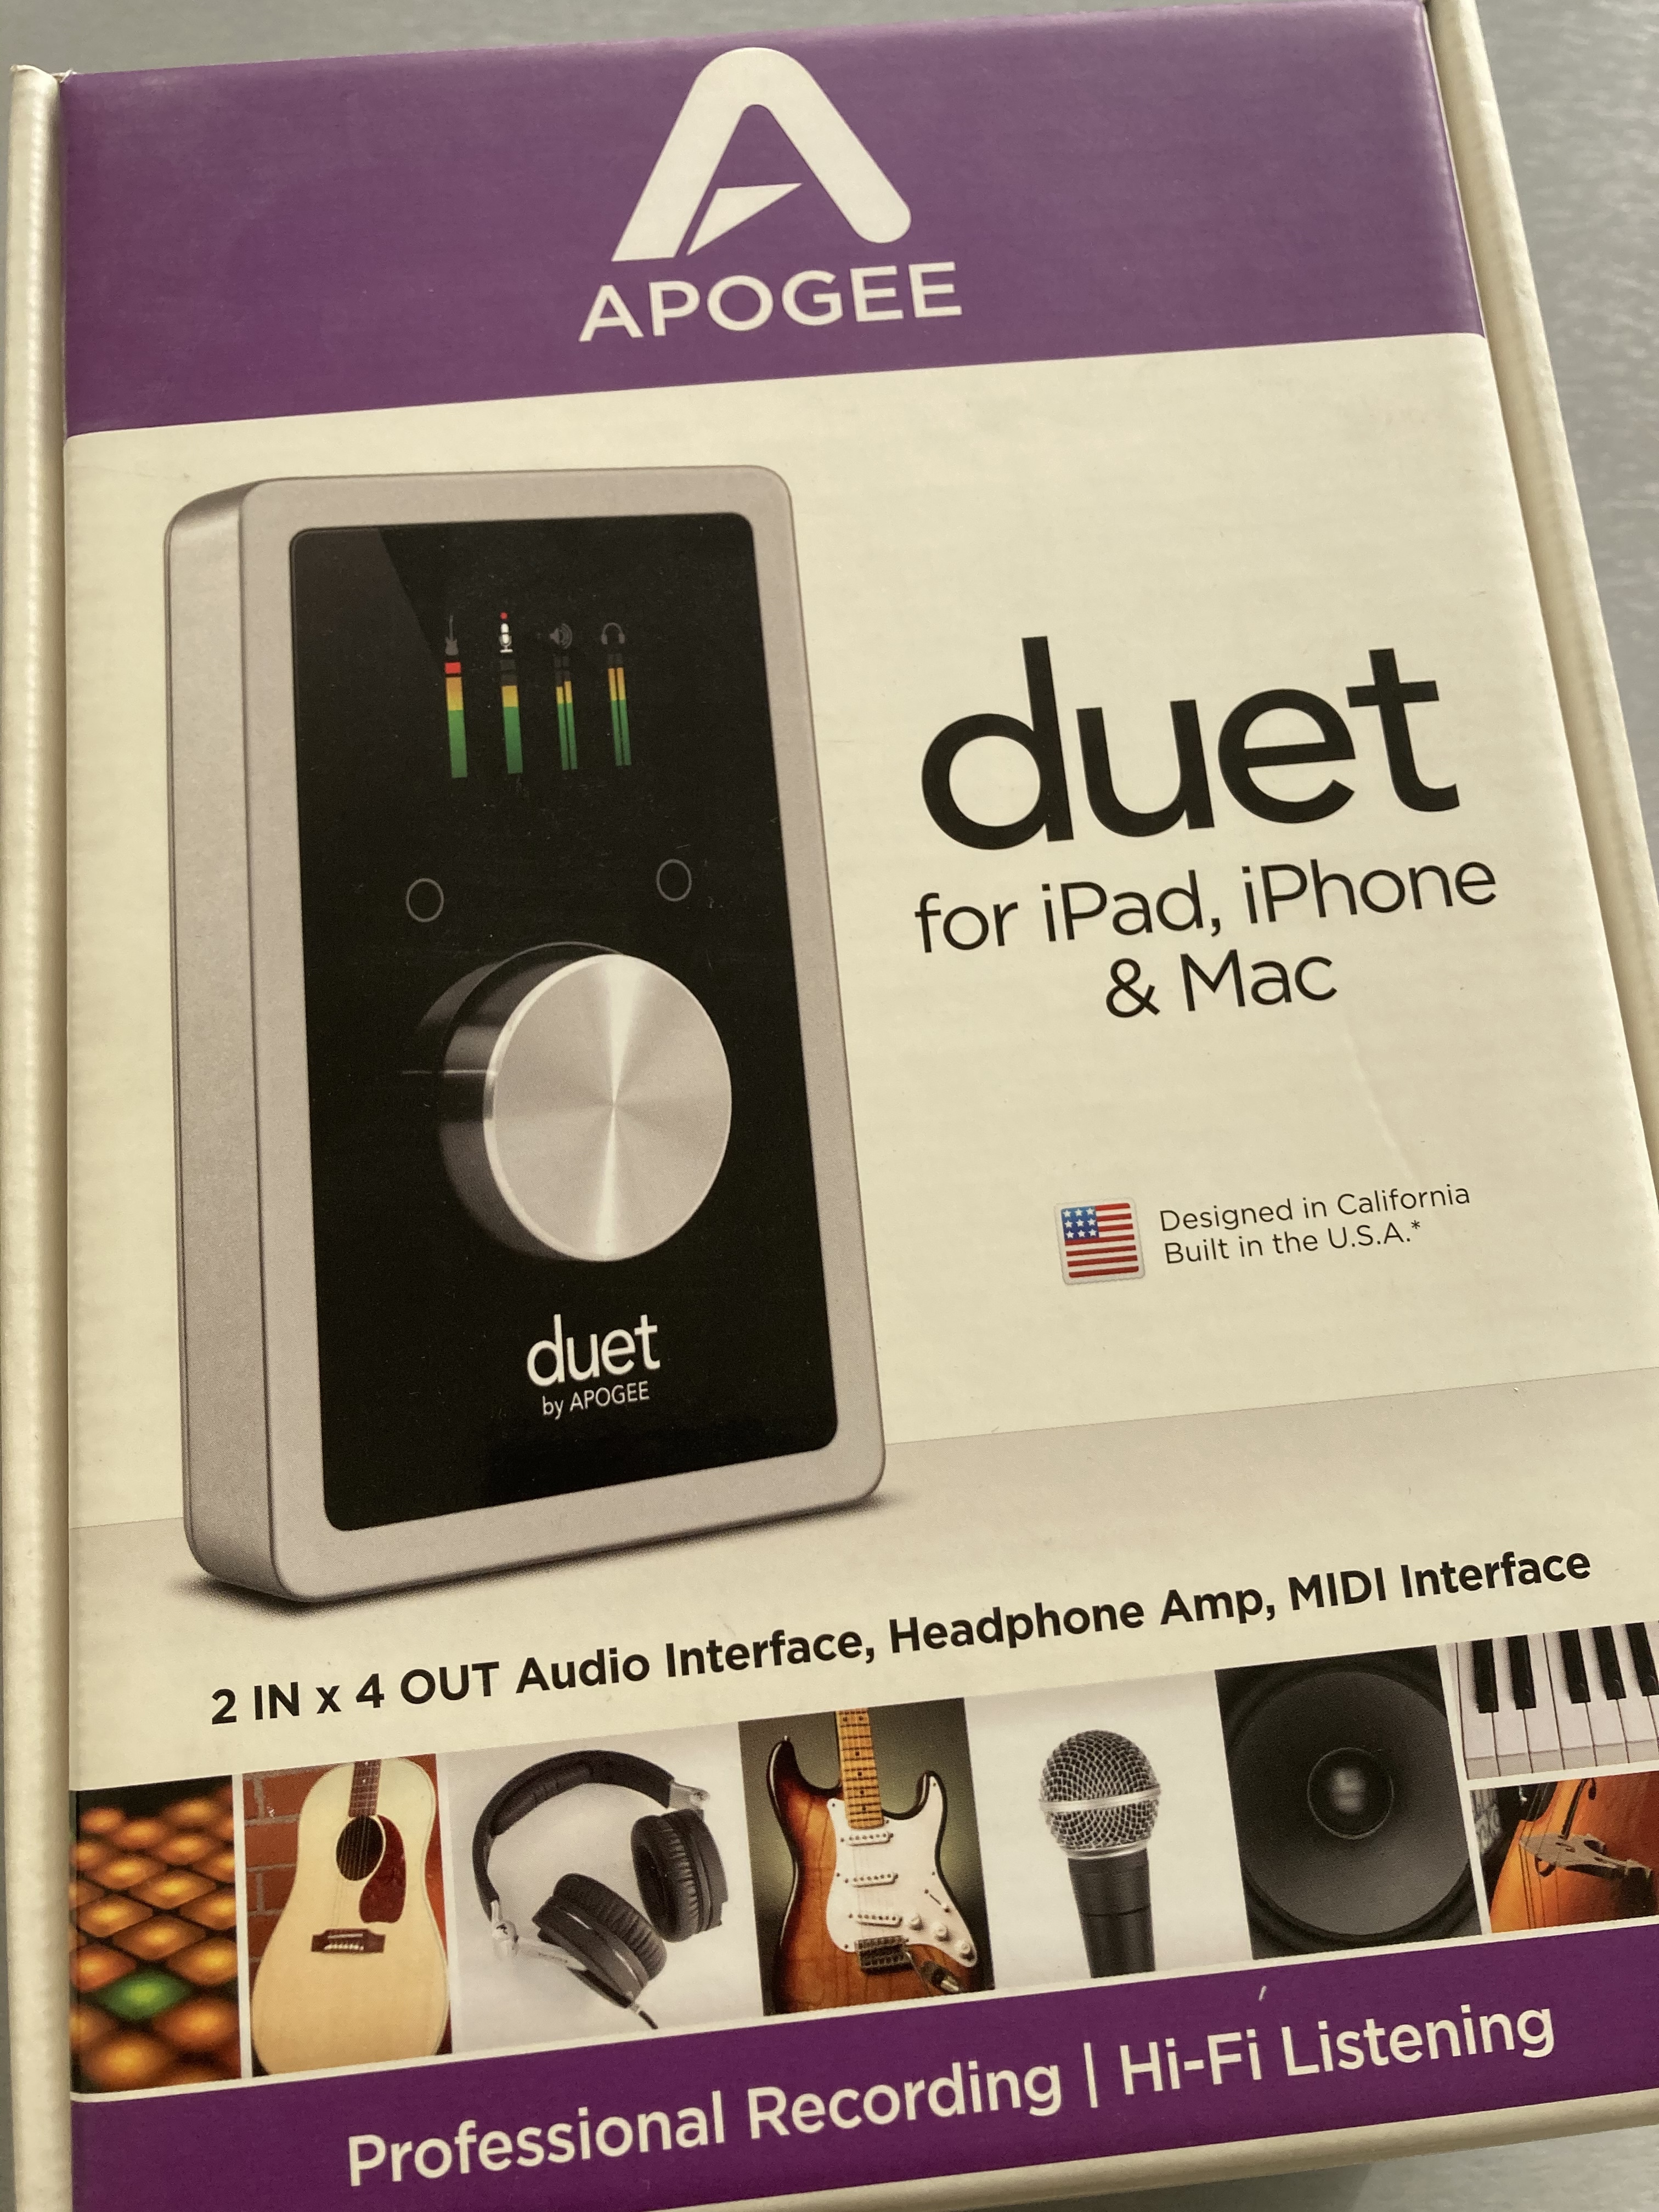 日本販売 Apogee Mac & iPad for duet DTM/DAW